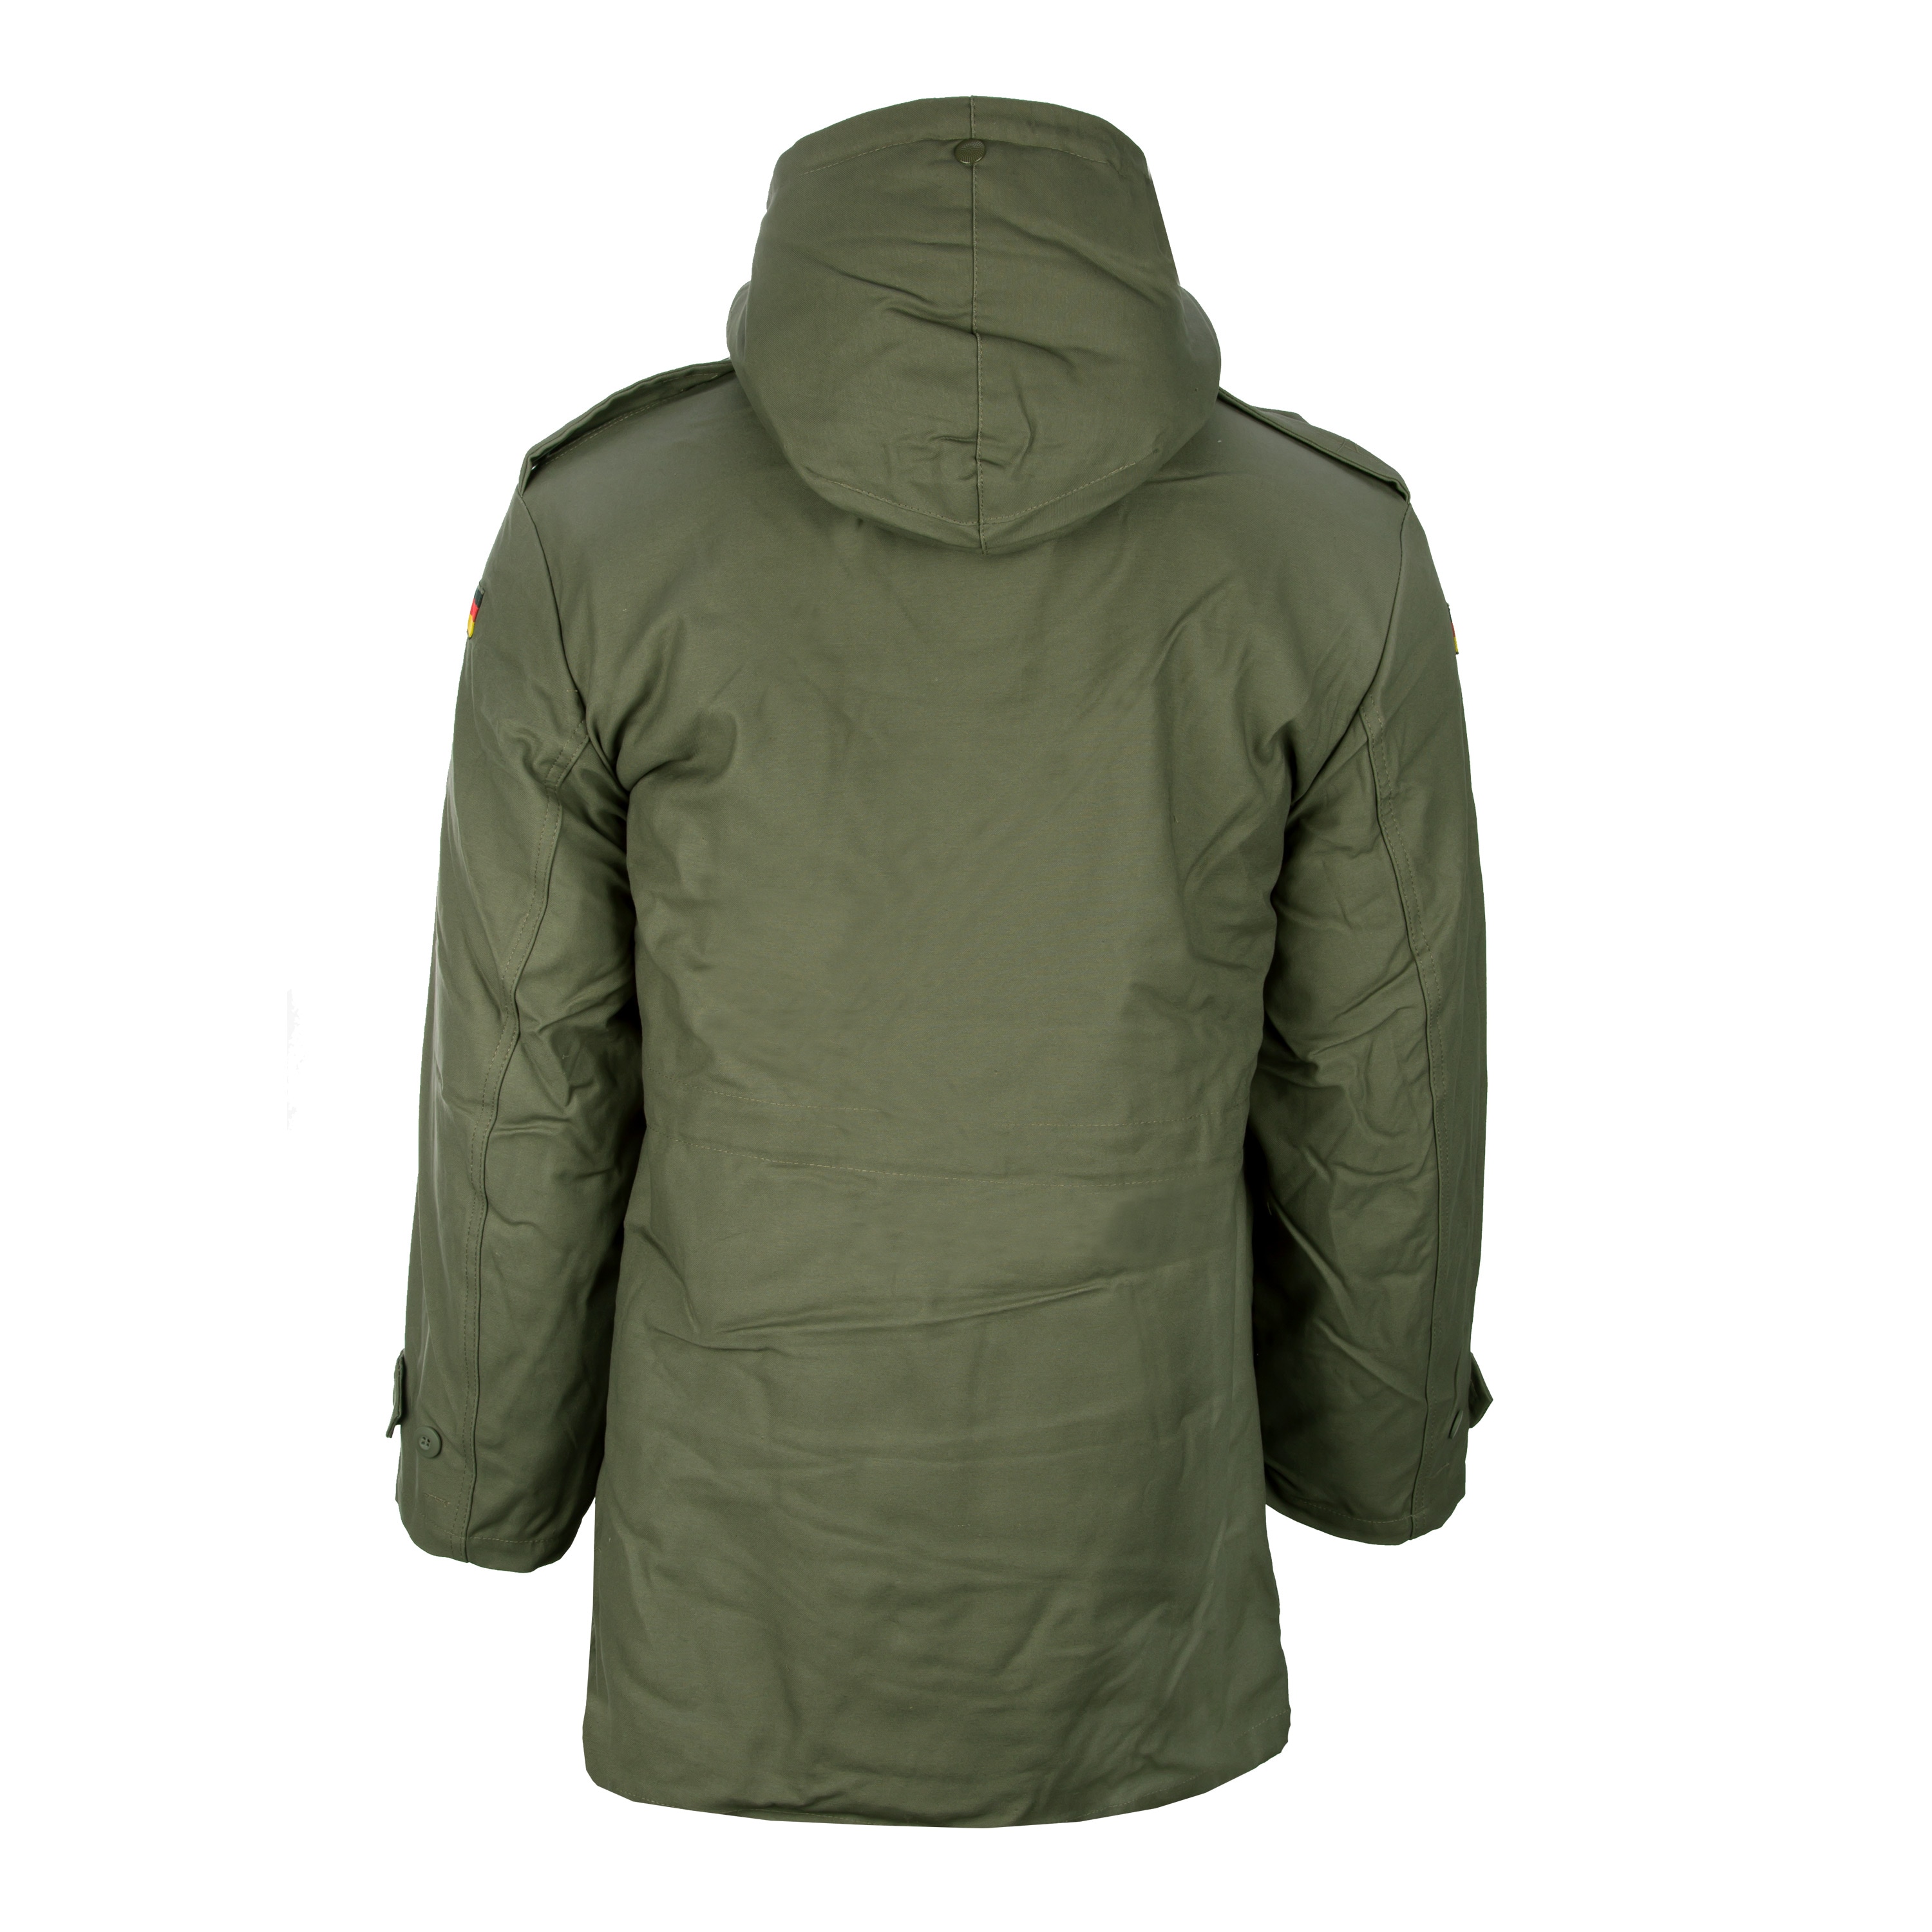 German Parka Original Army Jacket Military Fleece Lined Winter Hooded Coat Olive 